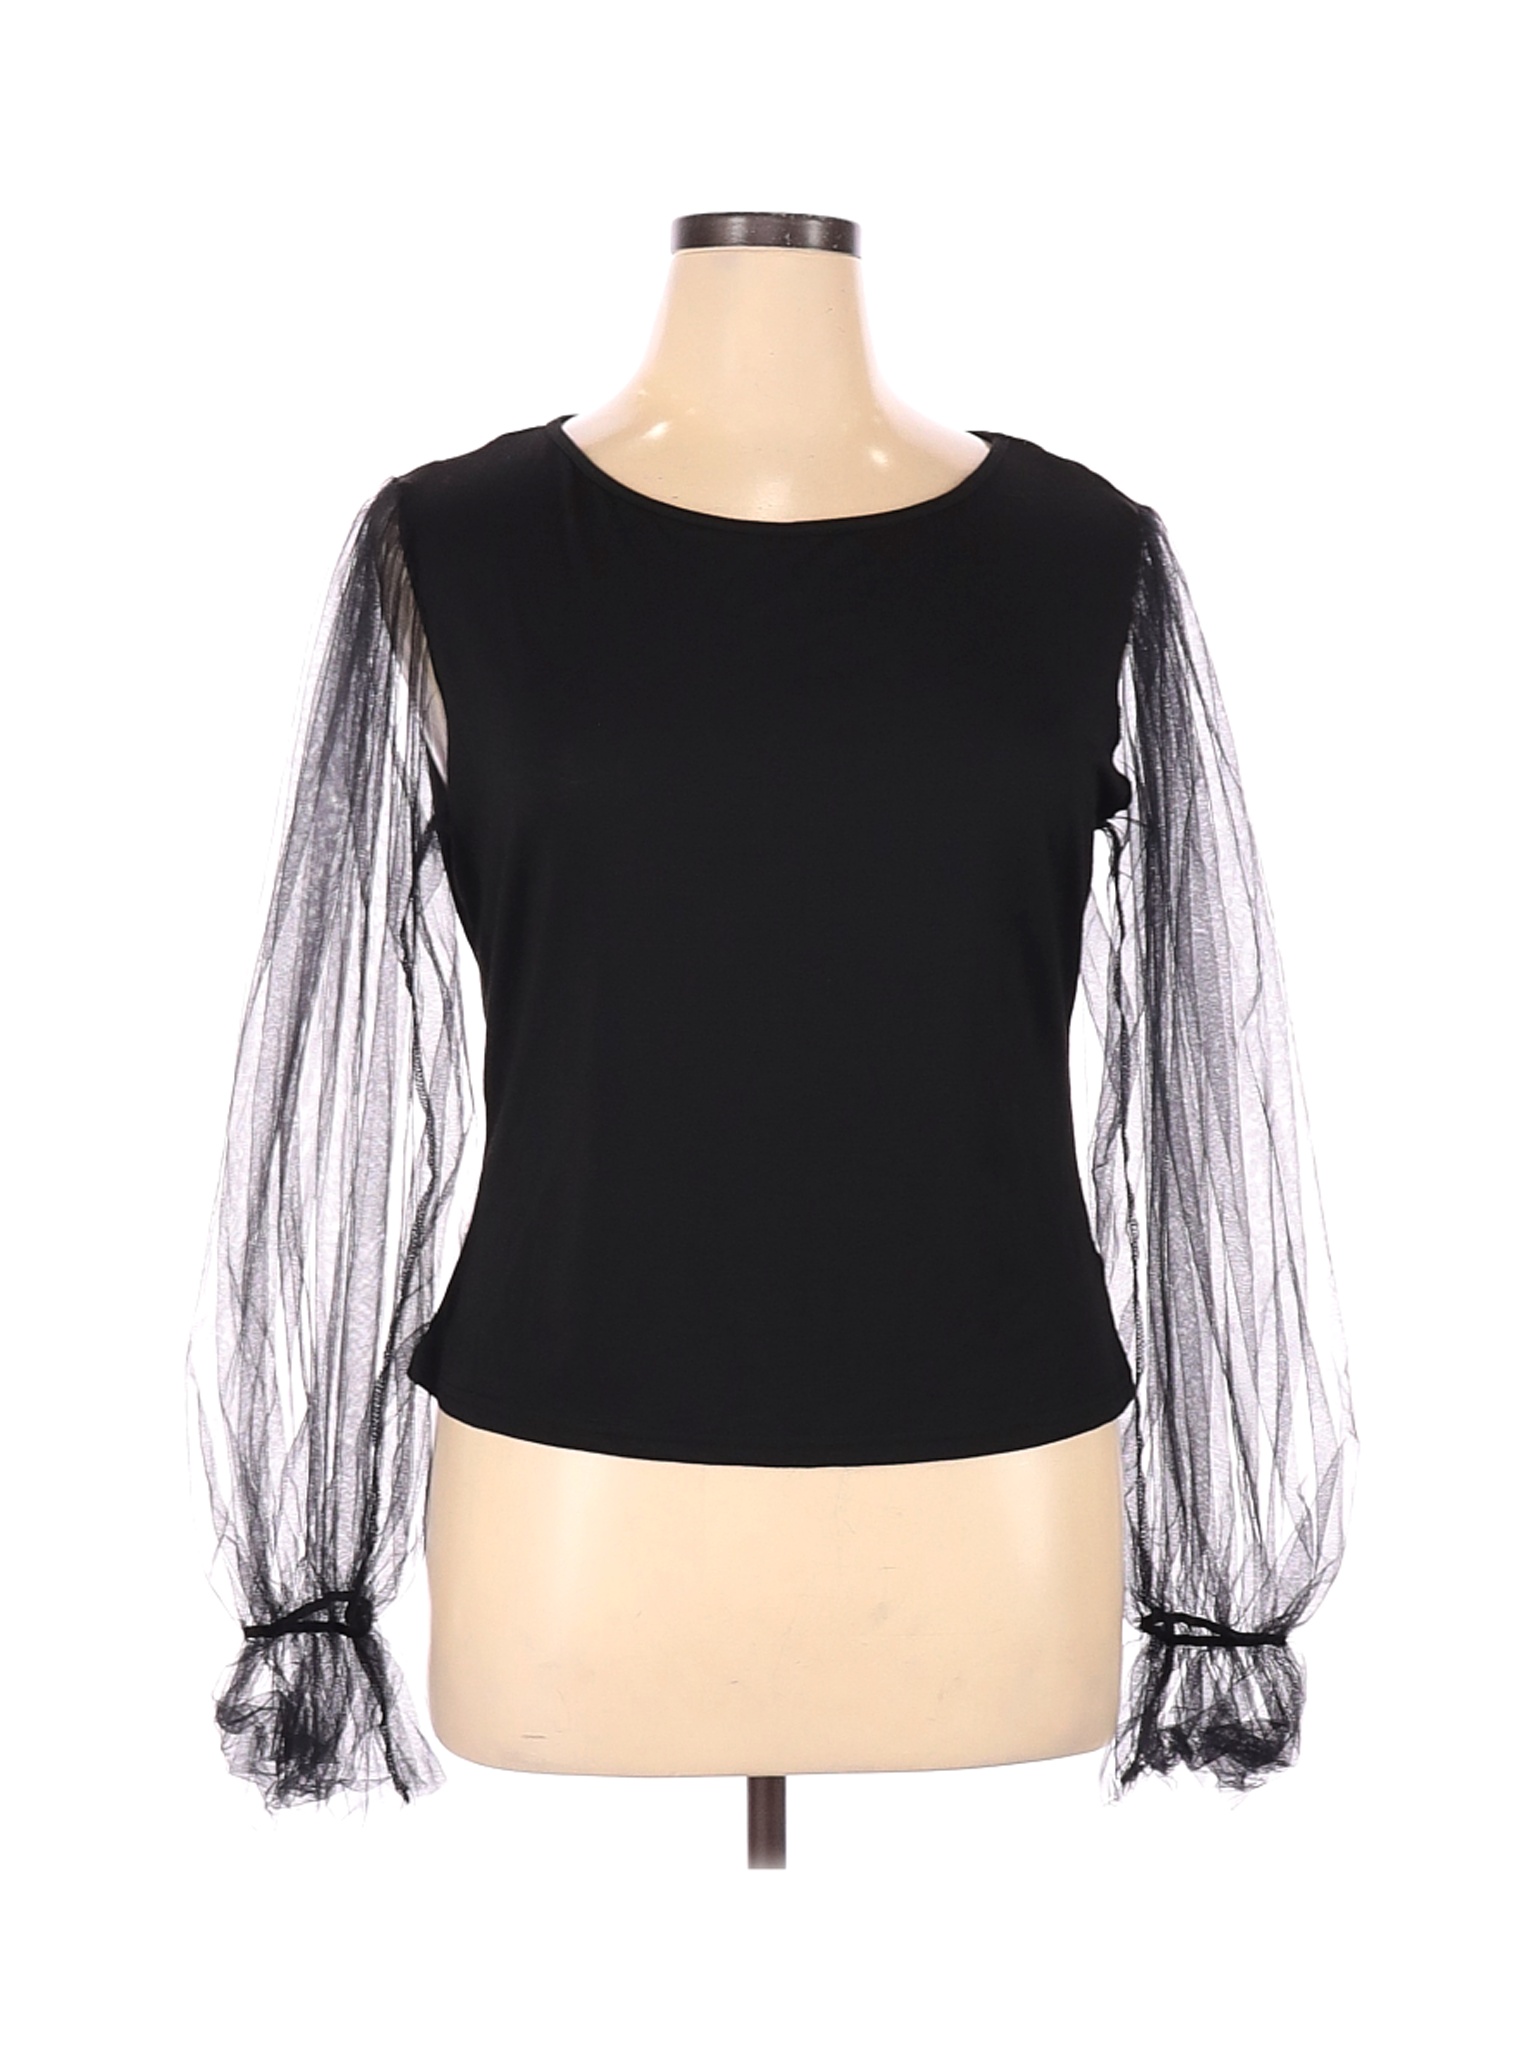 Shein Women Black Long Sleeve Top 1X Plus | eBay